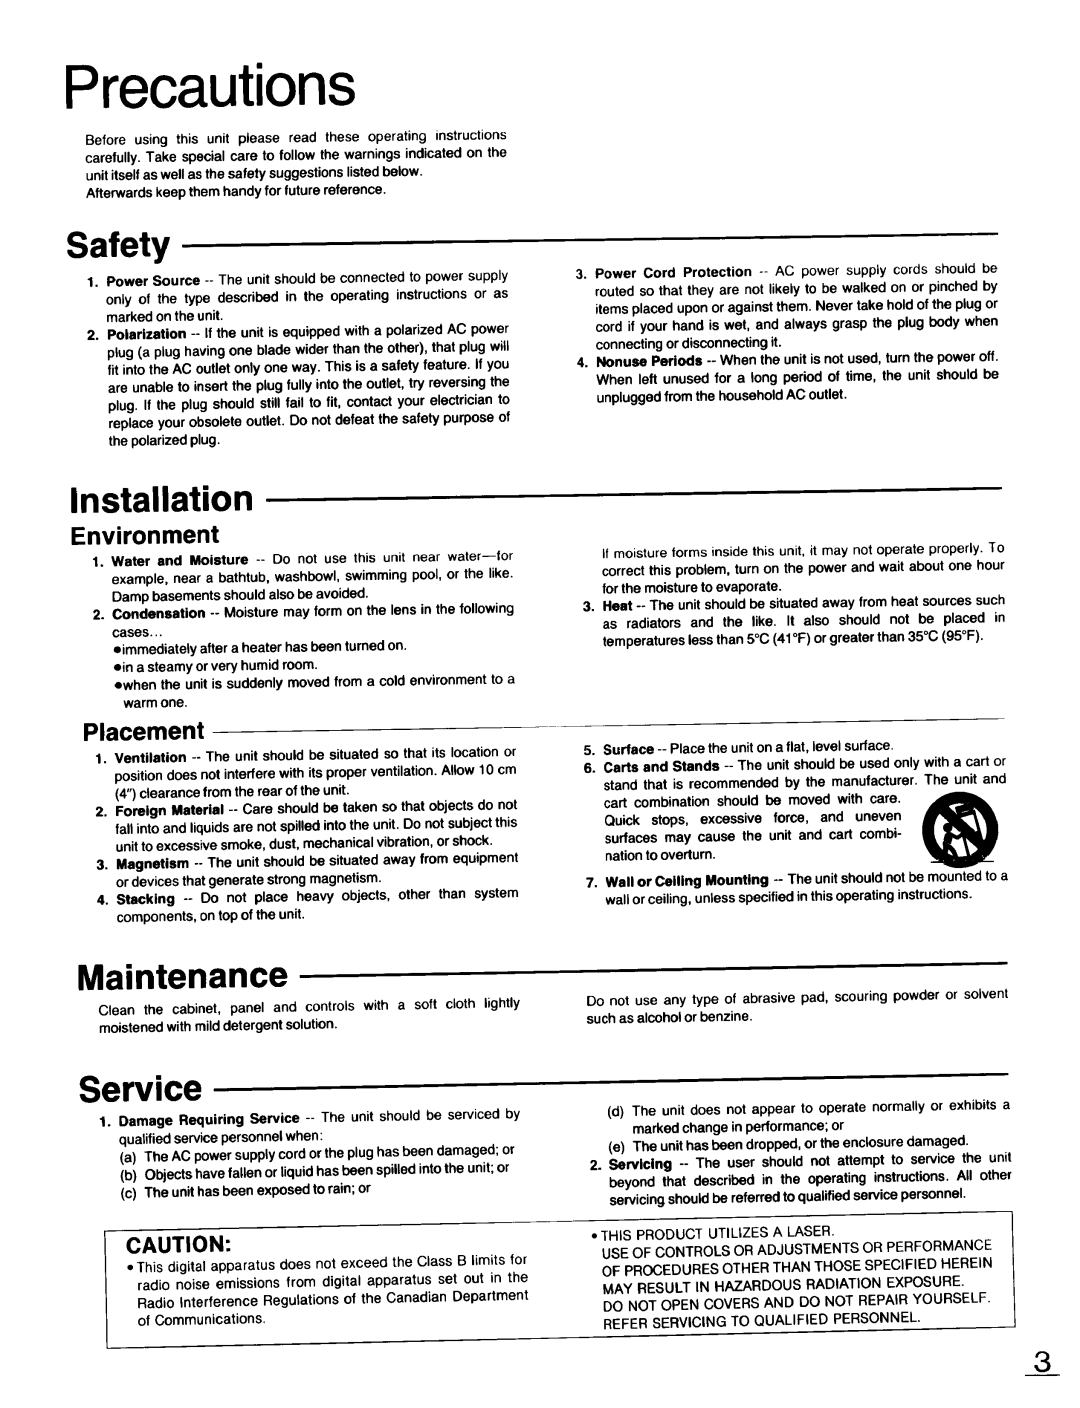 Technics SL-PD947 operating instructions Precautions, Safety, Installation, Maintenance, Service 